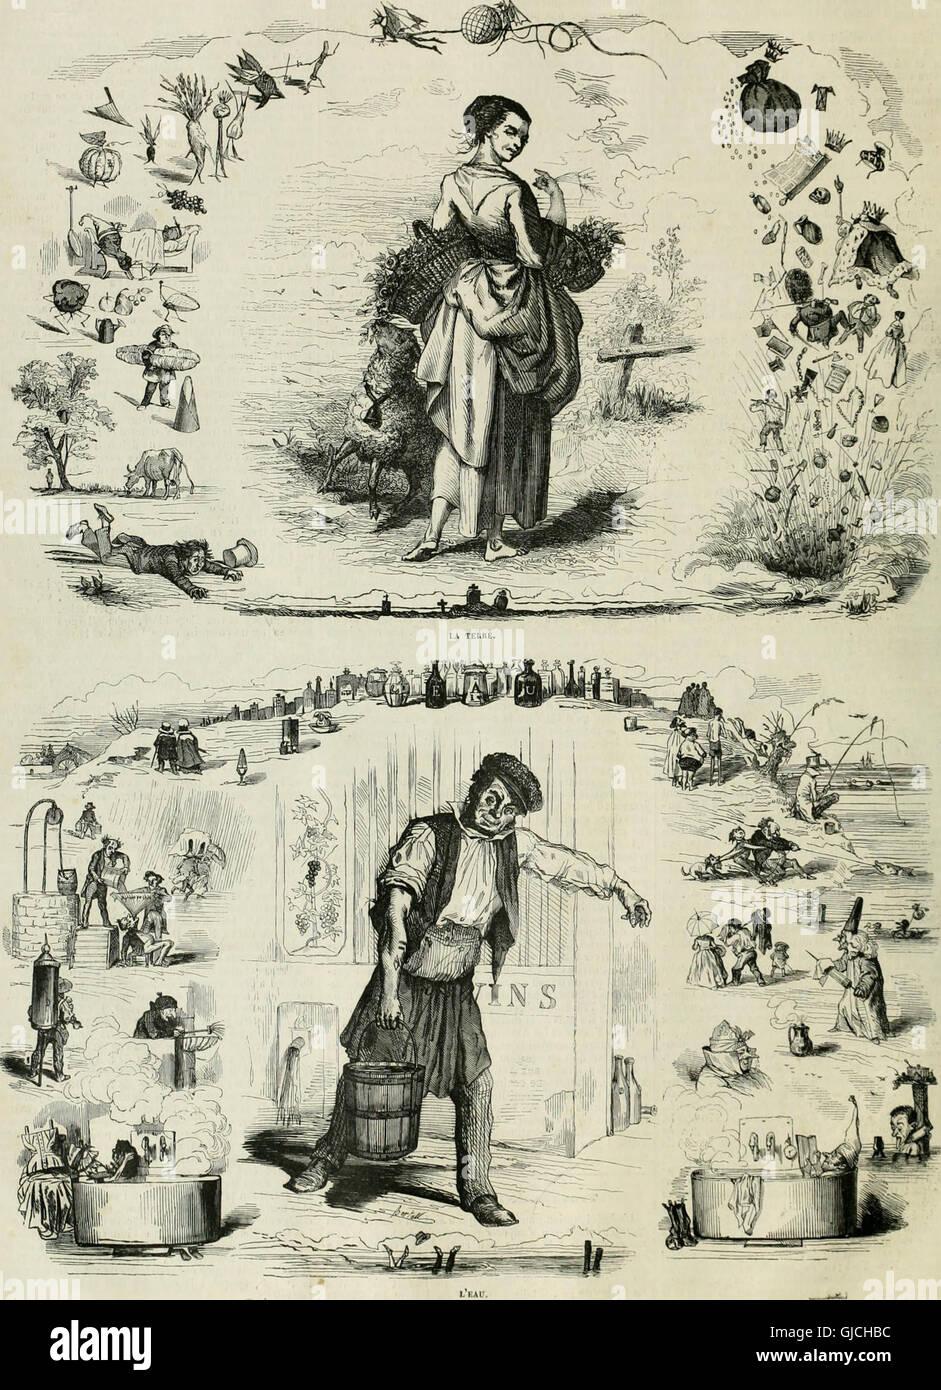 L'illustration - journal universel (1843) Stock Photo